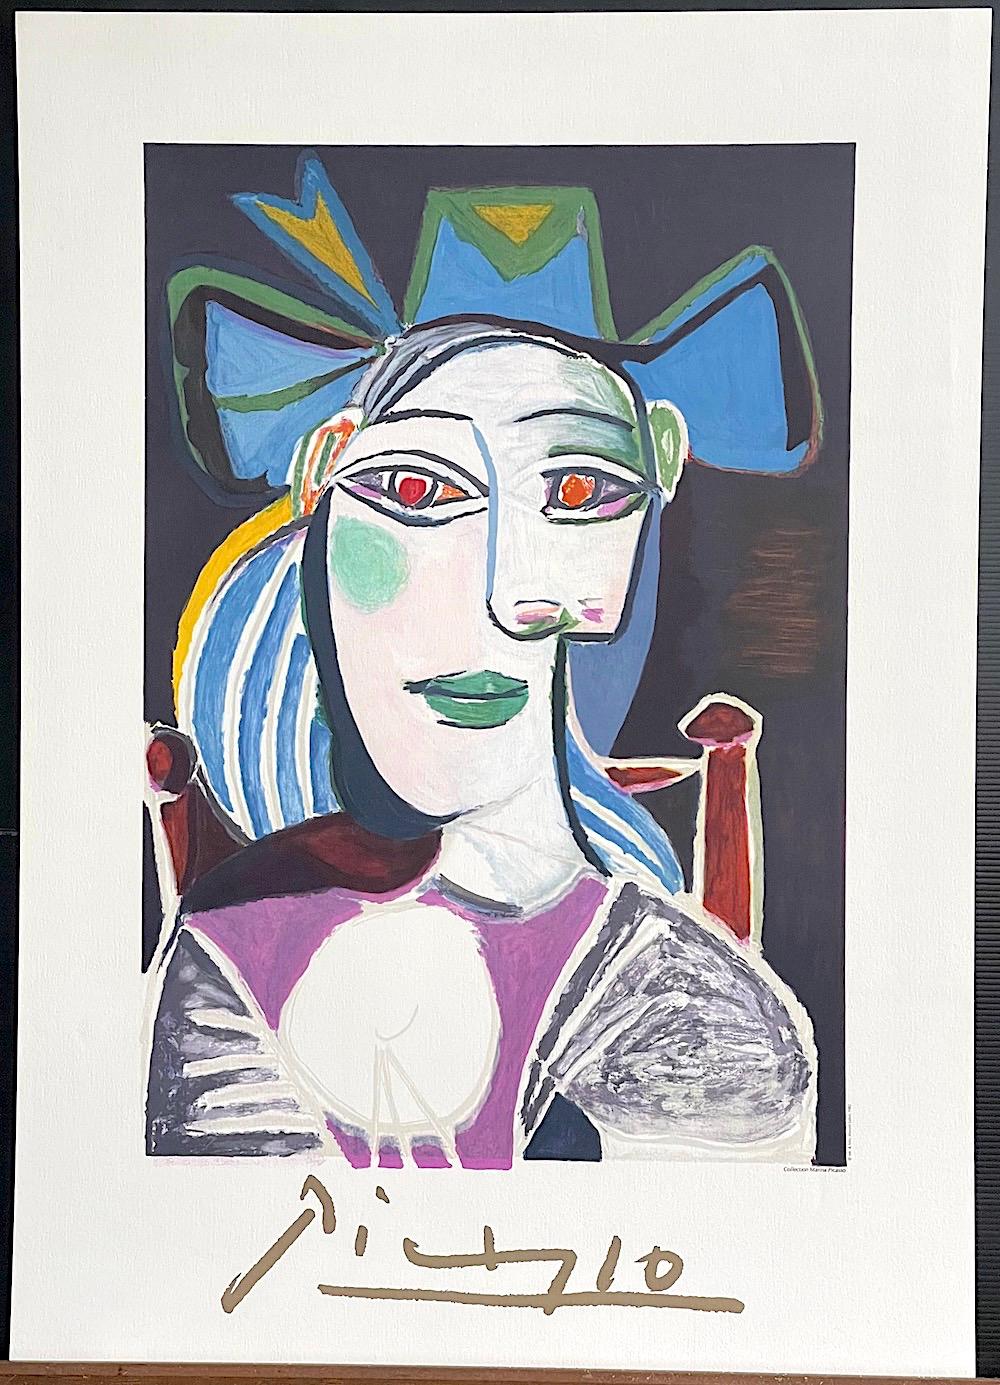 BUSTE DE FEMME CHAPEAU BLEU Lithographie, sitzende Frau mit blauem Hut und grünen Lippen (Abstrakt), Print, von (after) Pablo Picasso